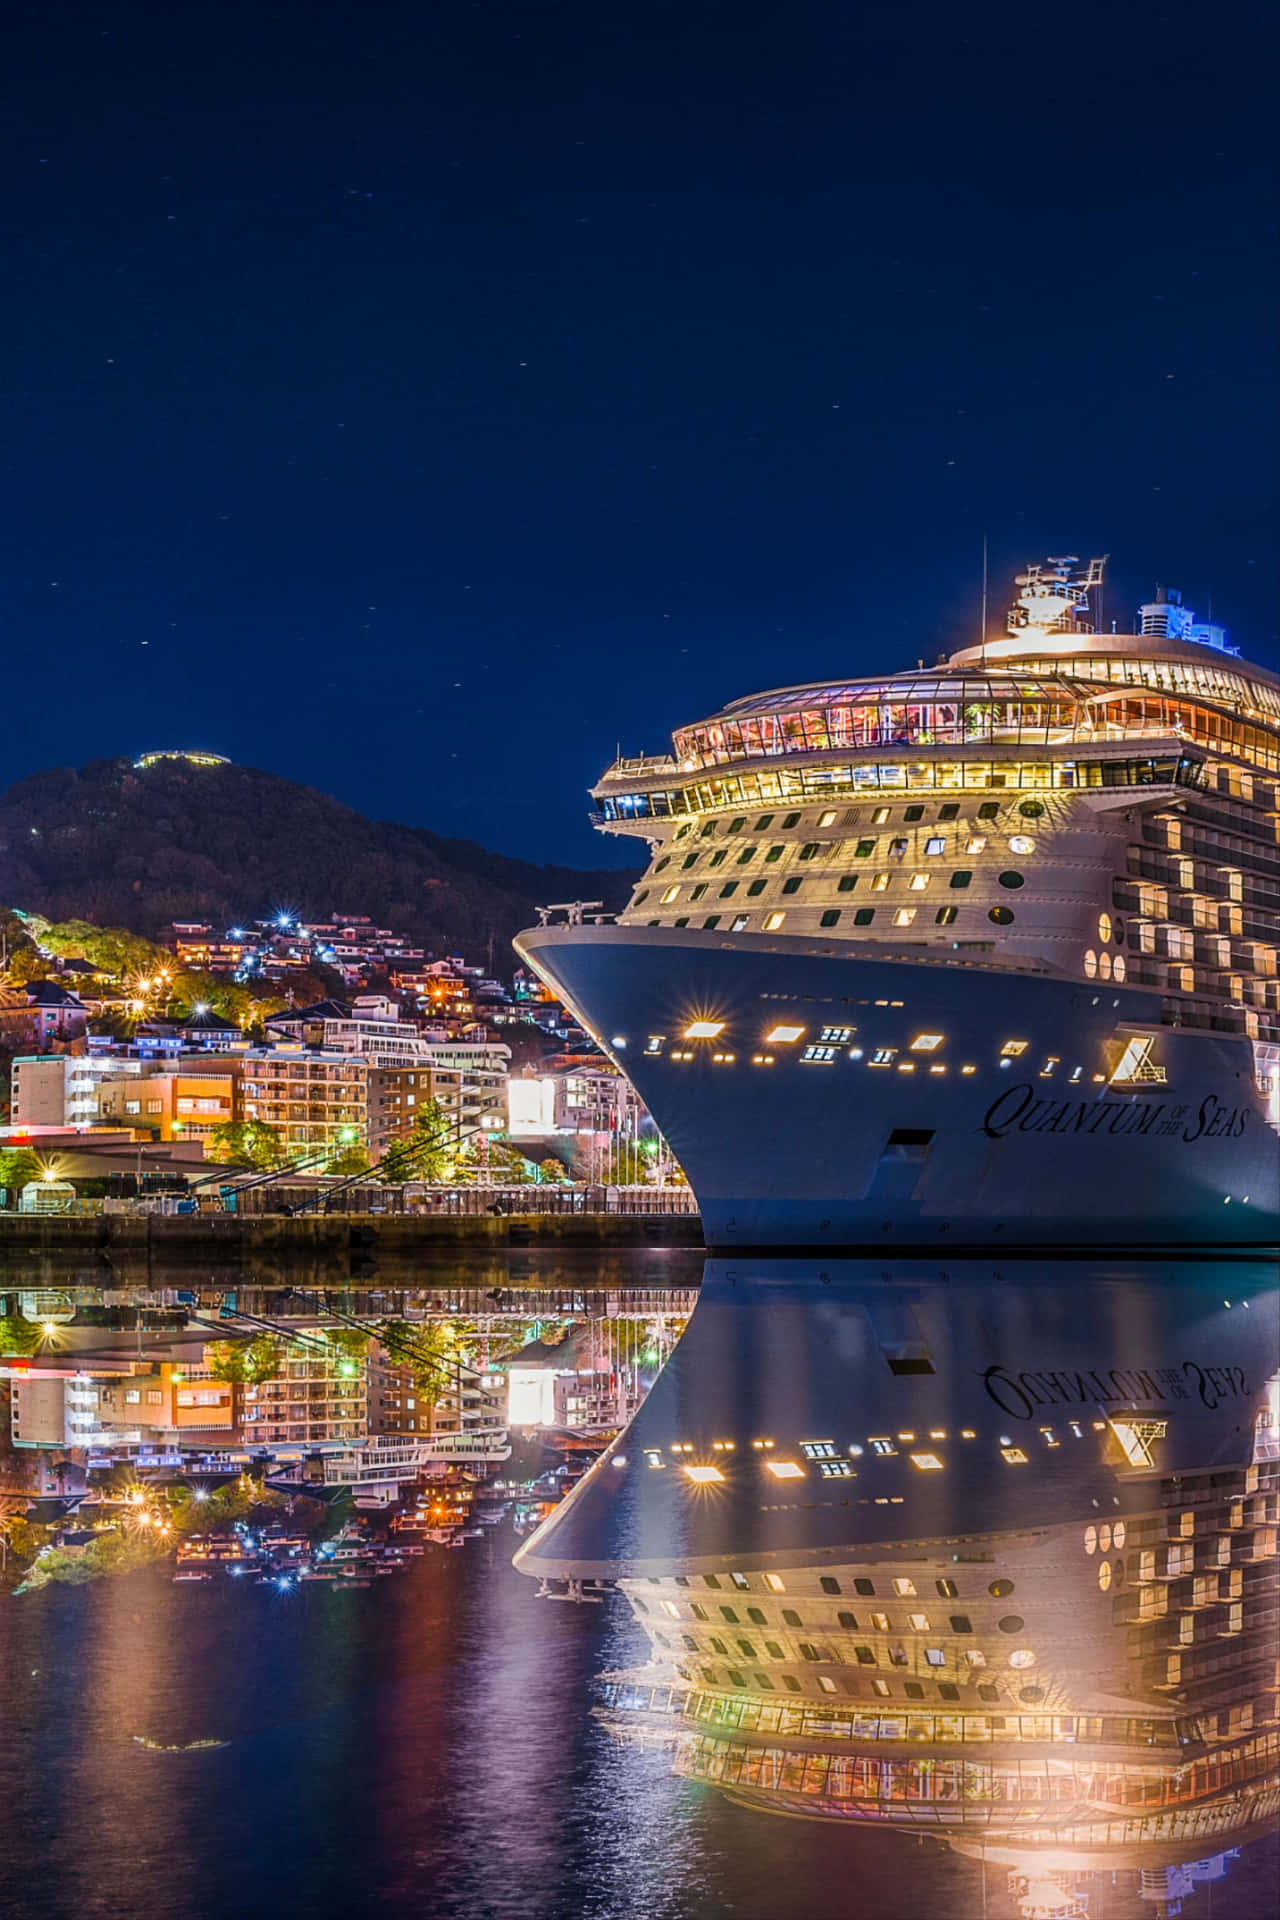 Imagende Un Crucero Con Luces Por La Noche.